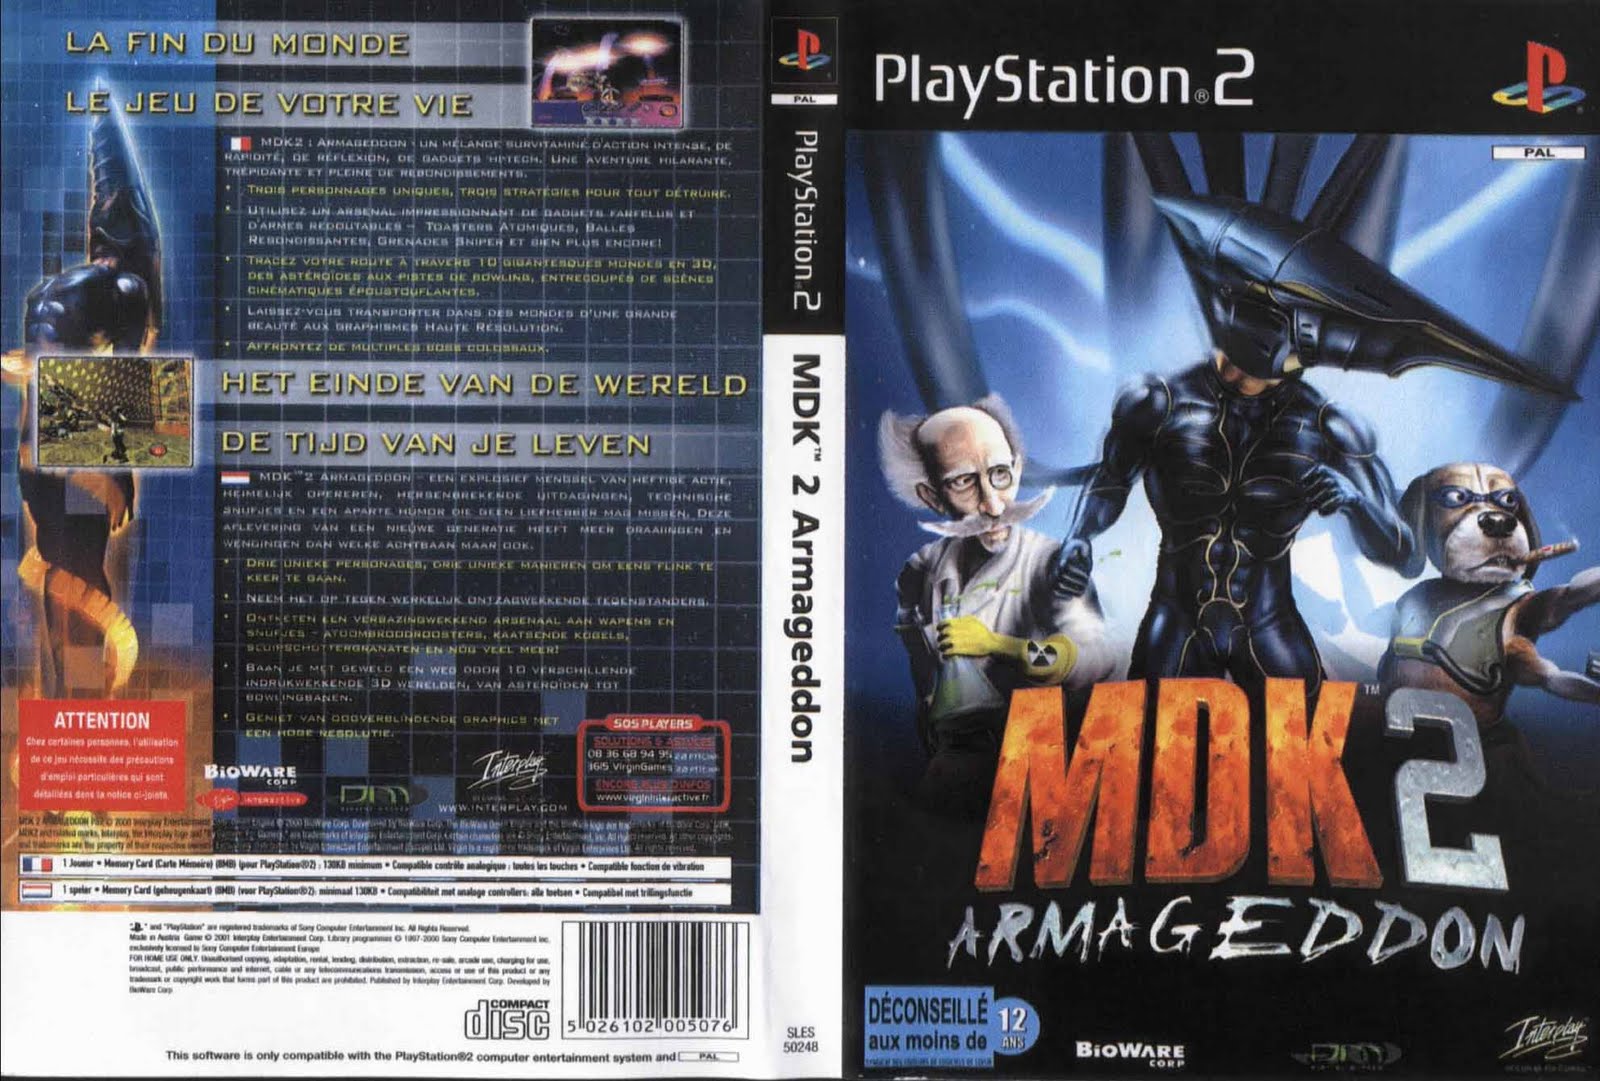 Мдк 2 01.01. Mdk2 ps1. MDK 2: Armageddon (ps2) Chip DVD. МДК 2 на сони ПС 2. MDK игра ps1.